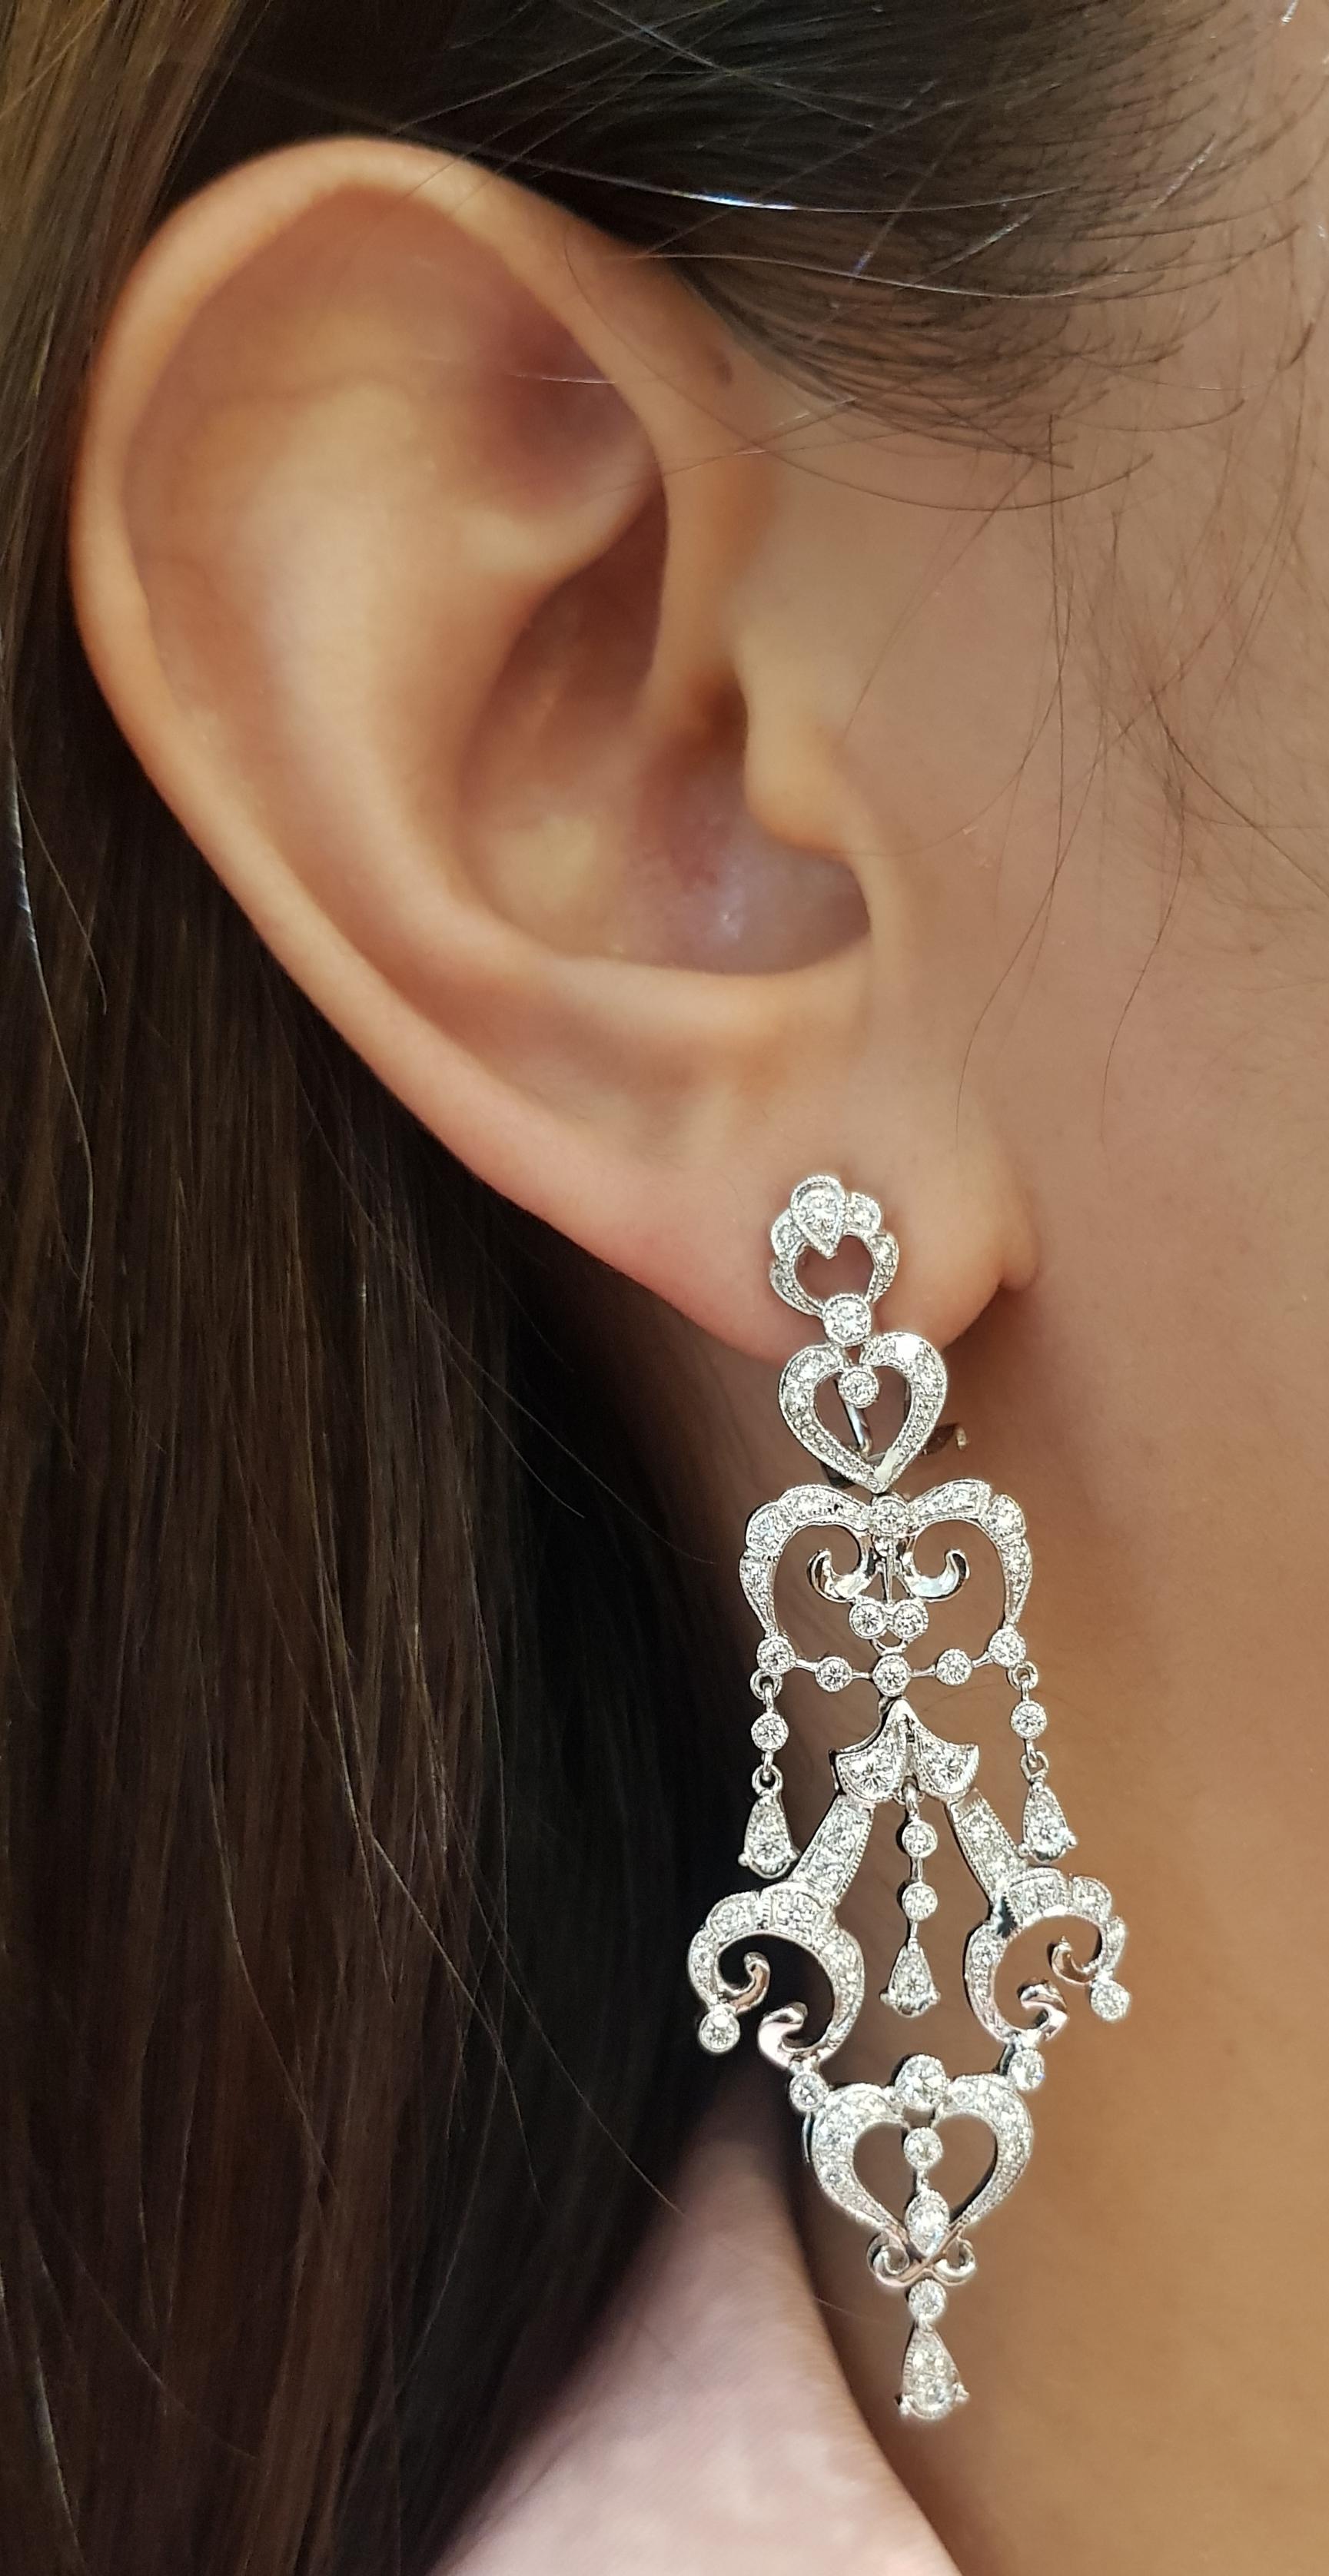 Diamond 1.60 carats Earrings set in 18 Karat White Gold Settings

Width:  2.1 cm 
Length:  6.0 cm
Total Weight: 17.13 grams

